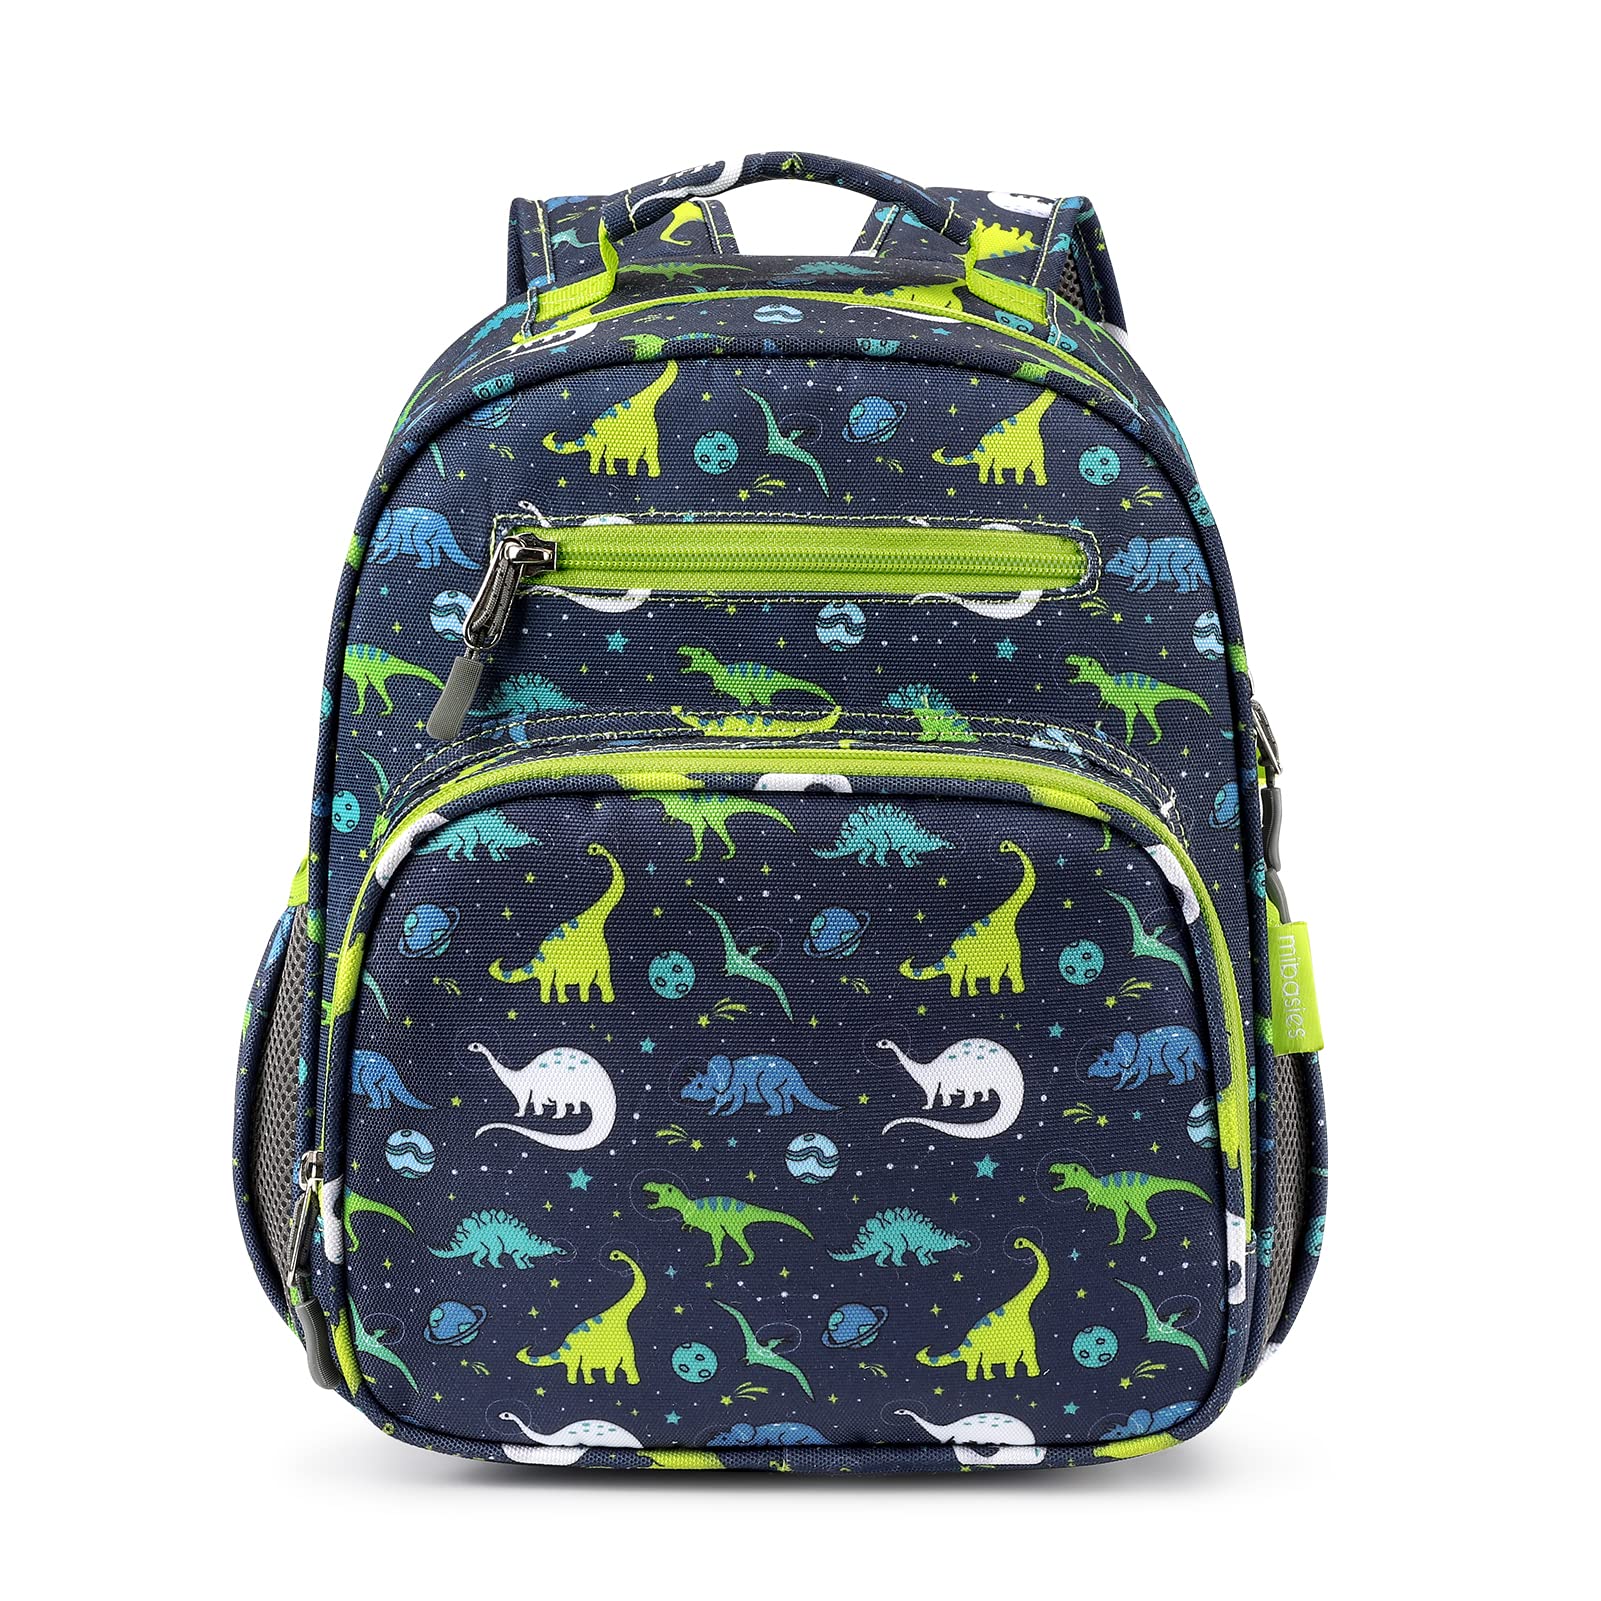 Personalized Kids Backpacks - Dinosaur